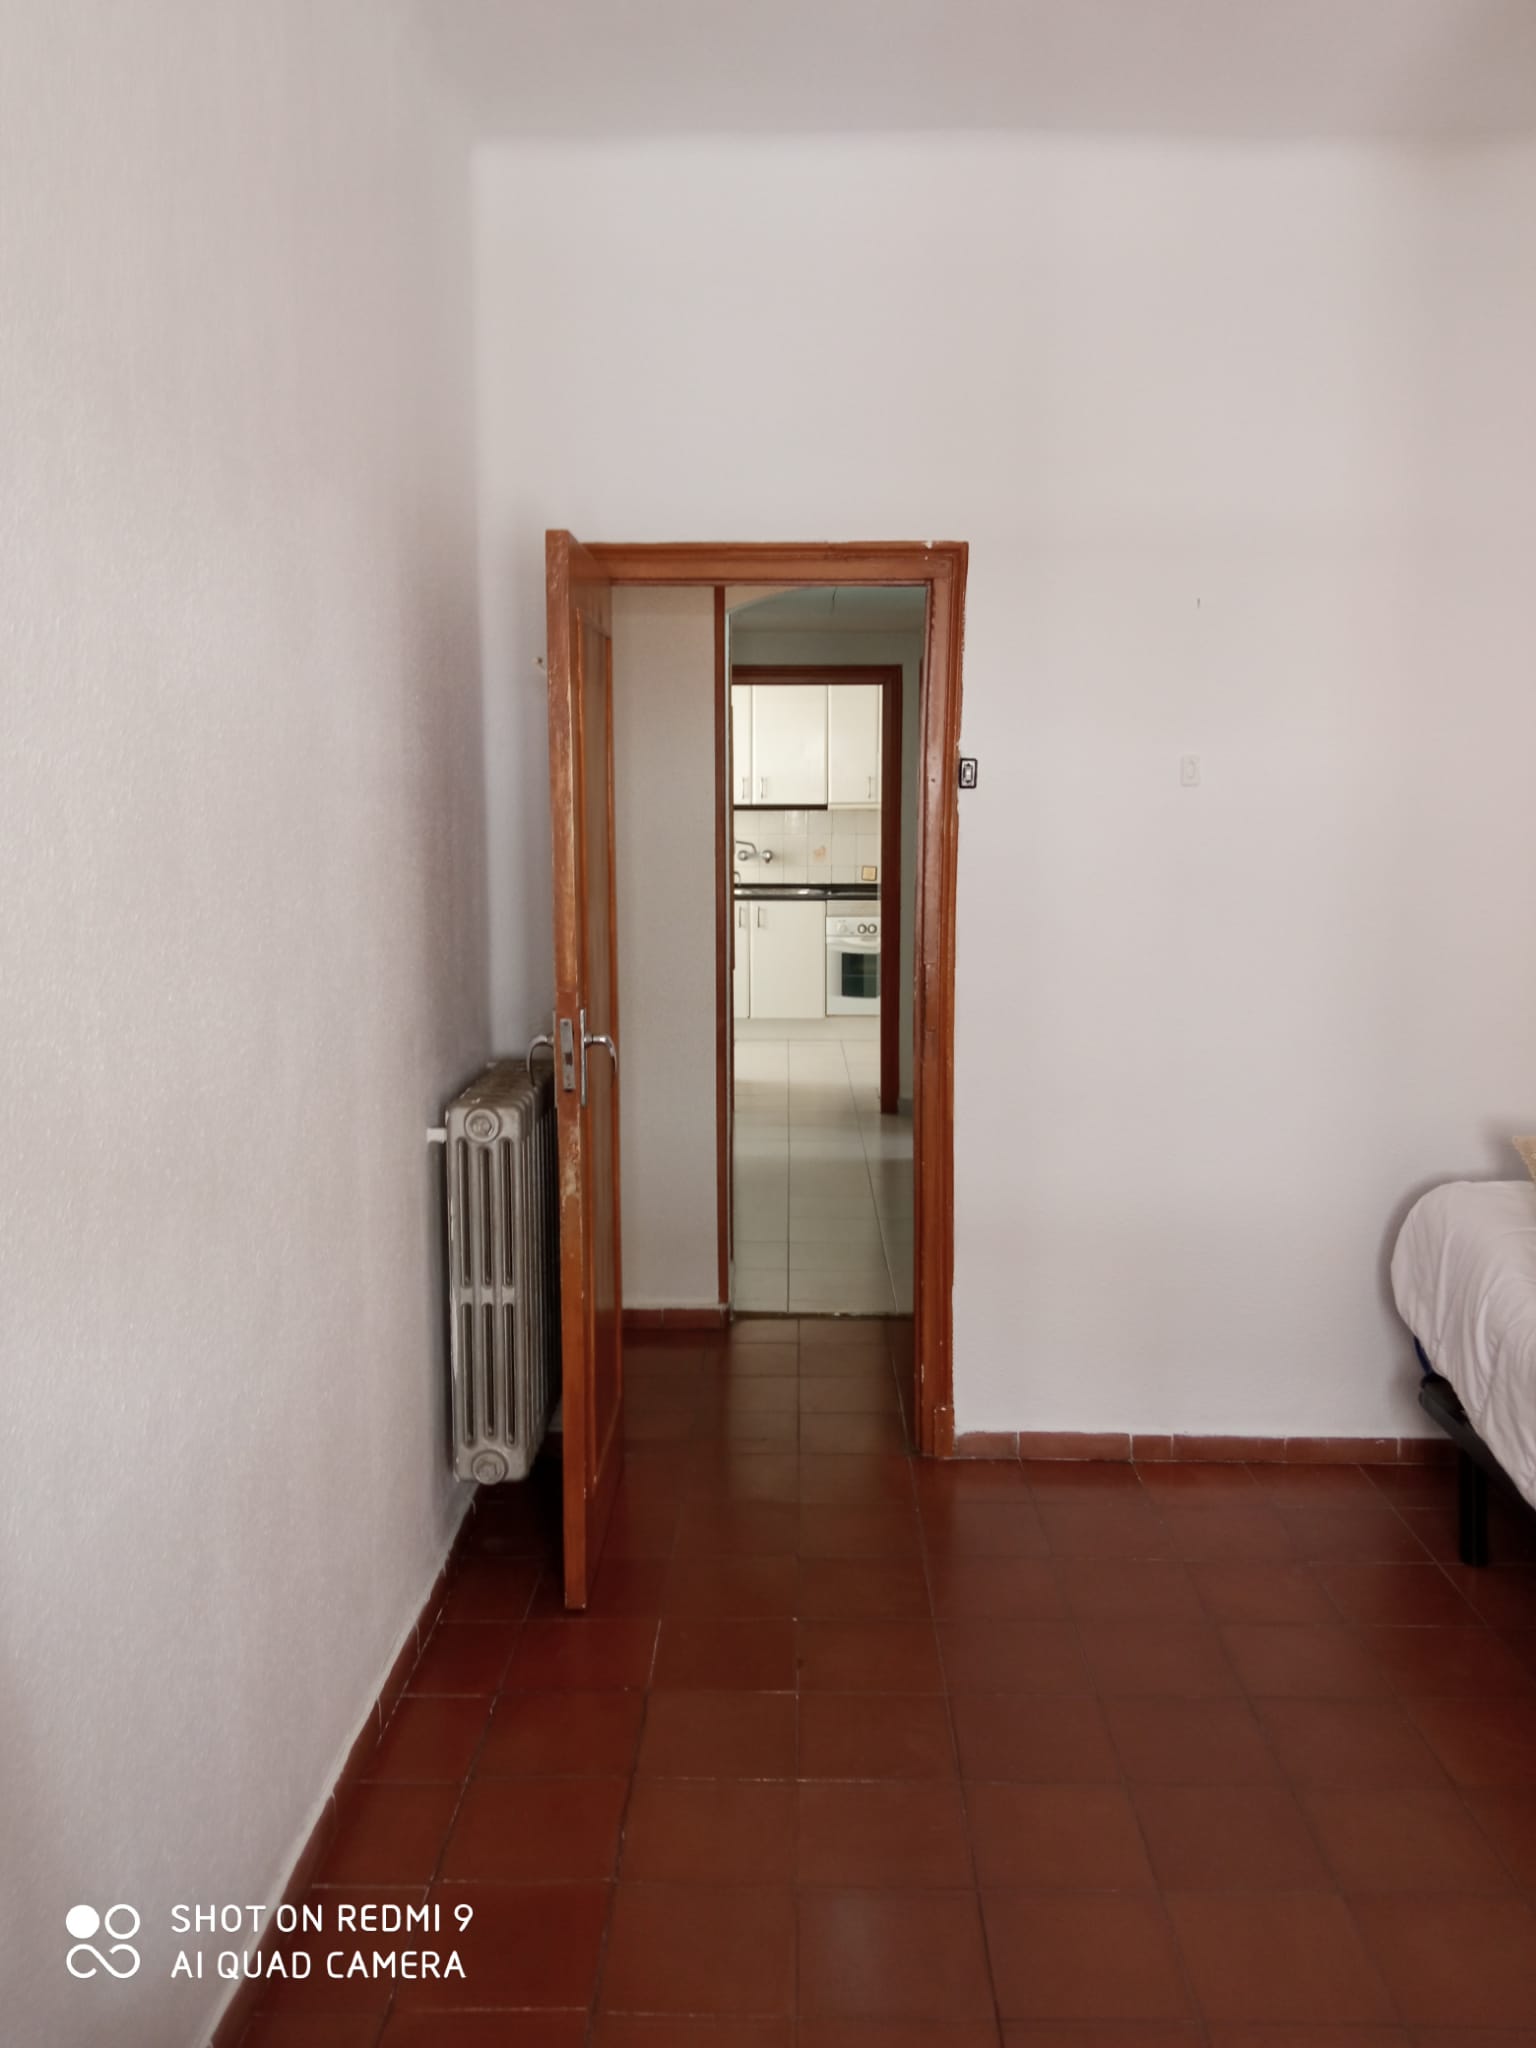 For sale of flat in Salamanca